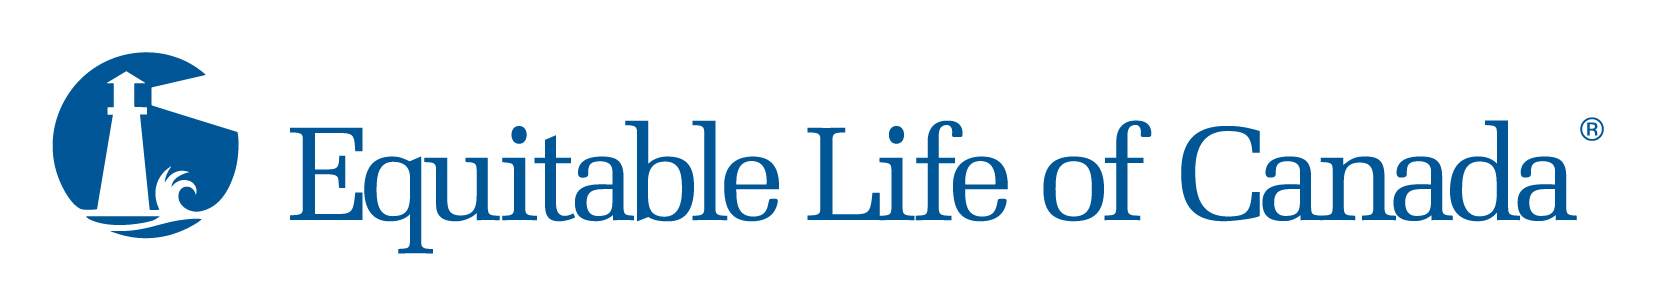 Equitable Life of Canada logo celebrating 100 years (1920-2020)